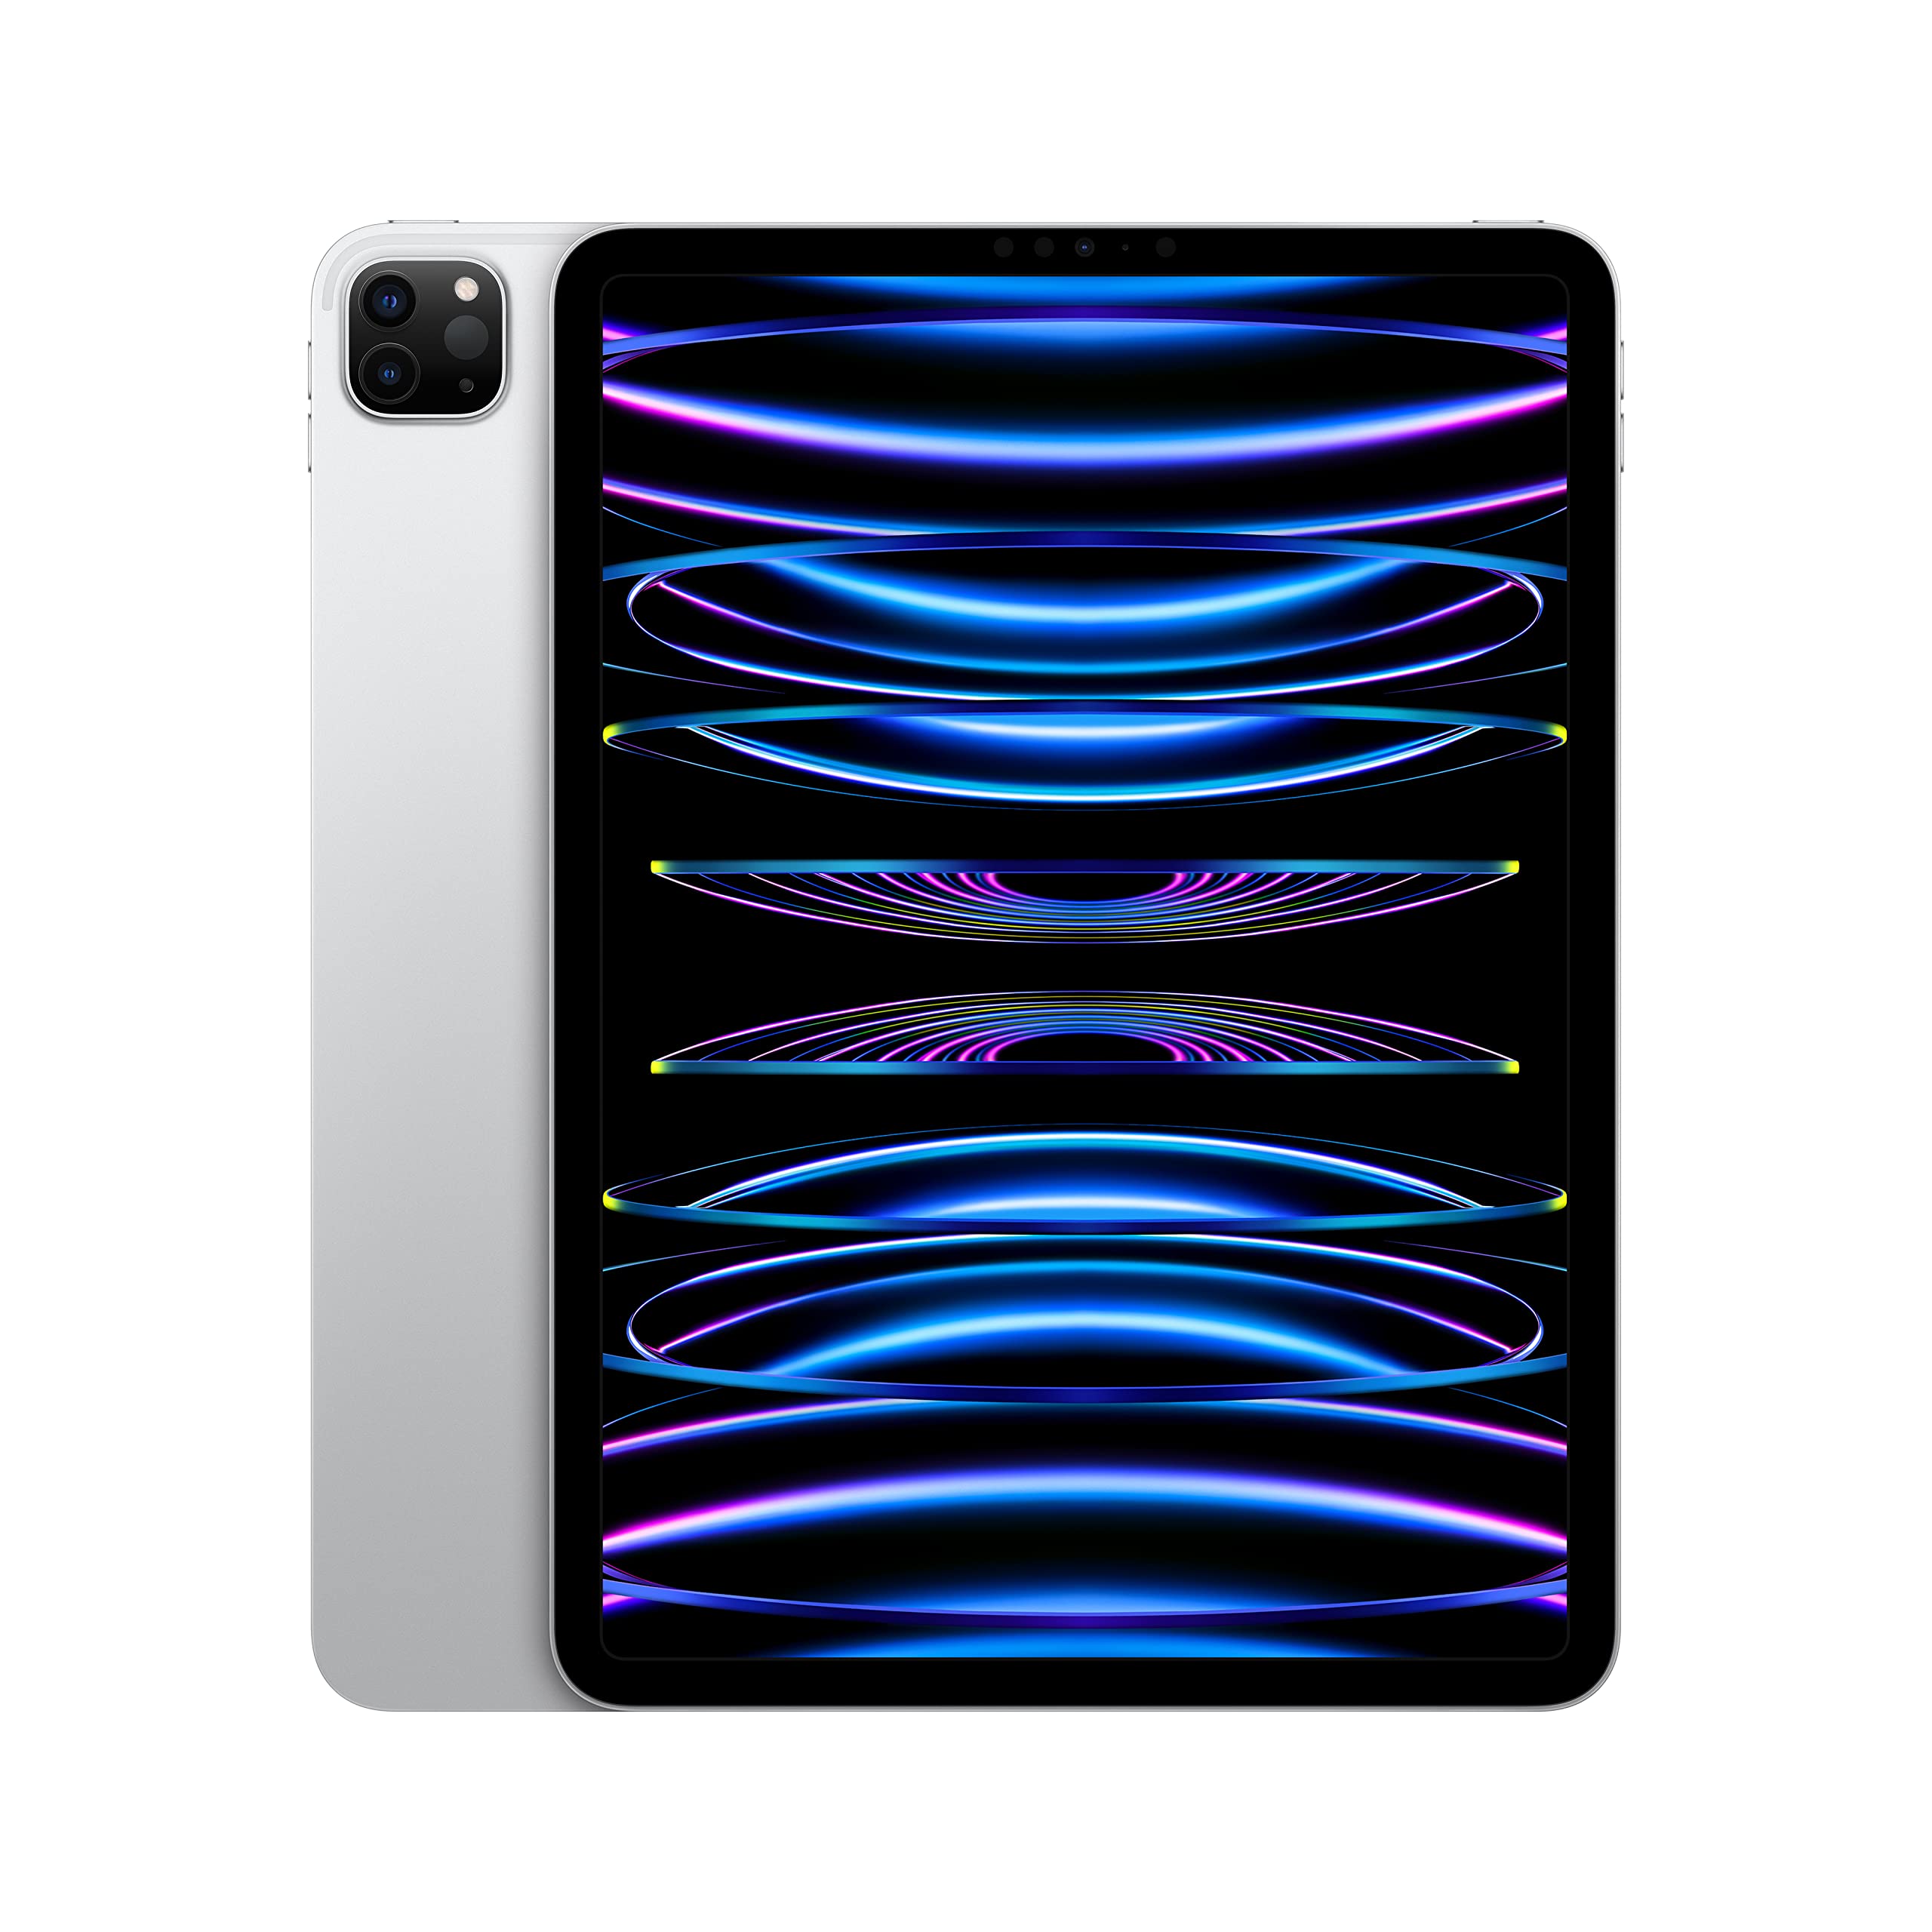 2022 Apple 11-inch iPad Pro (Wi-Fi, 128GB) - Silver (4th Generation)